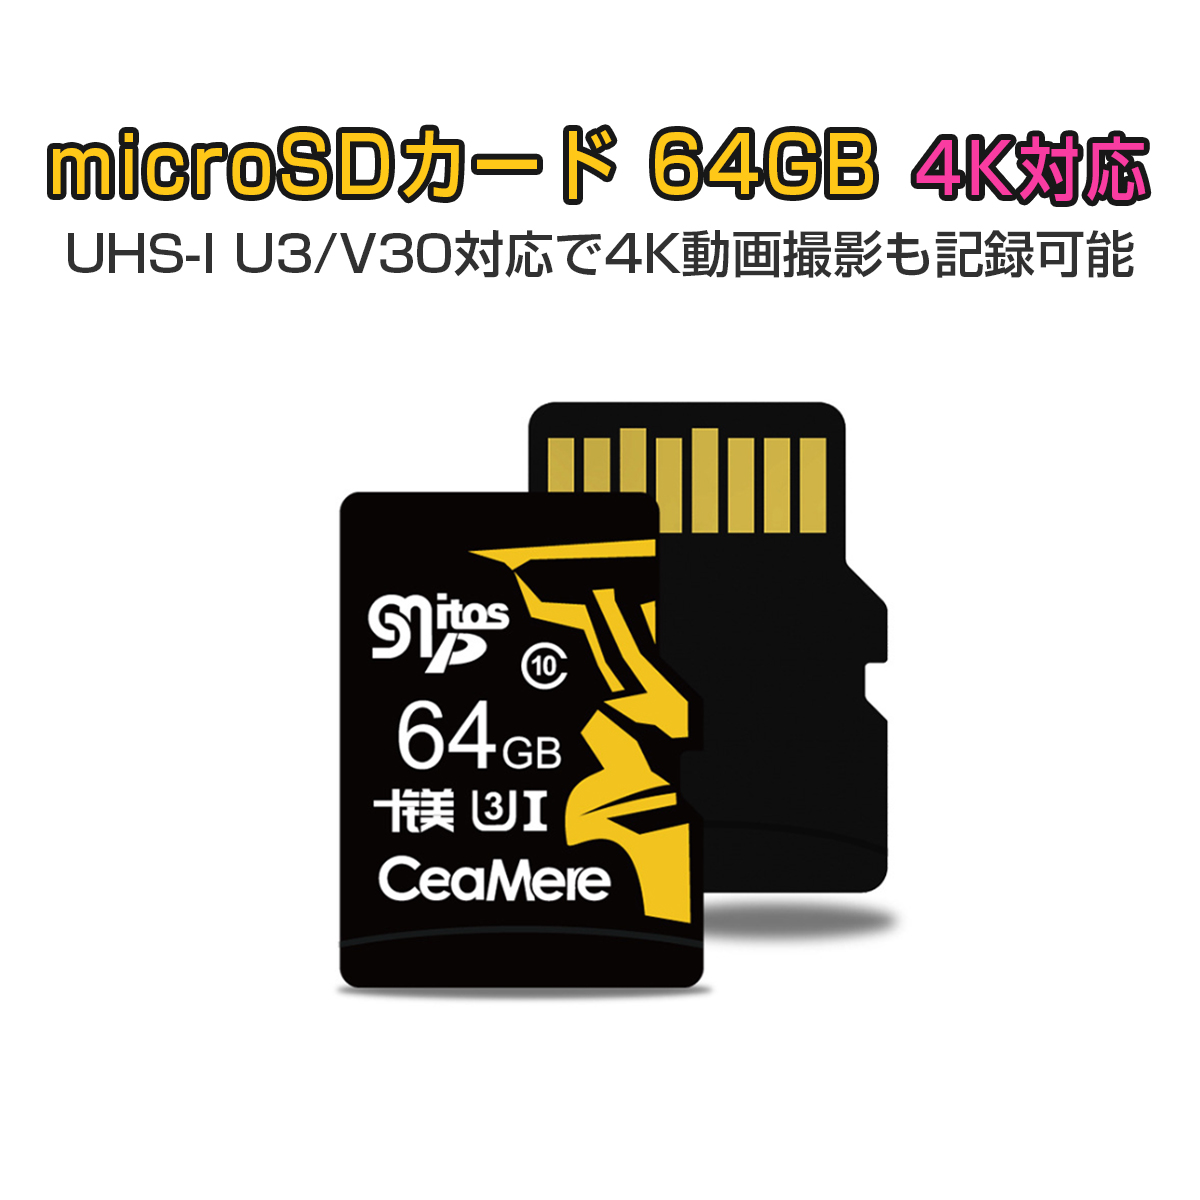 MicroSDカード 64GB UHS-I V30 超高速 最大95MB/sec 3D MLC NAND採用 ASチップ 高耐久 MicroSD マイクロSD microSDXC 300x SDカード変換アダプタ USBカードリーダー付き SDM便送料無料 6ヶ月保証